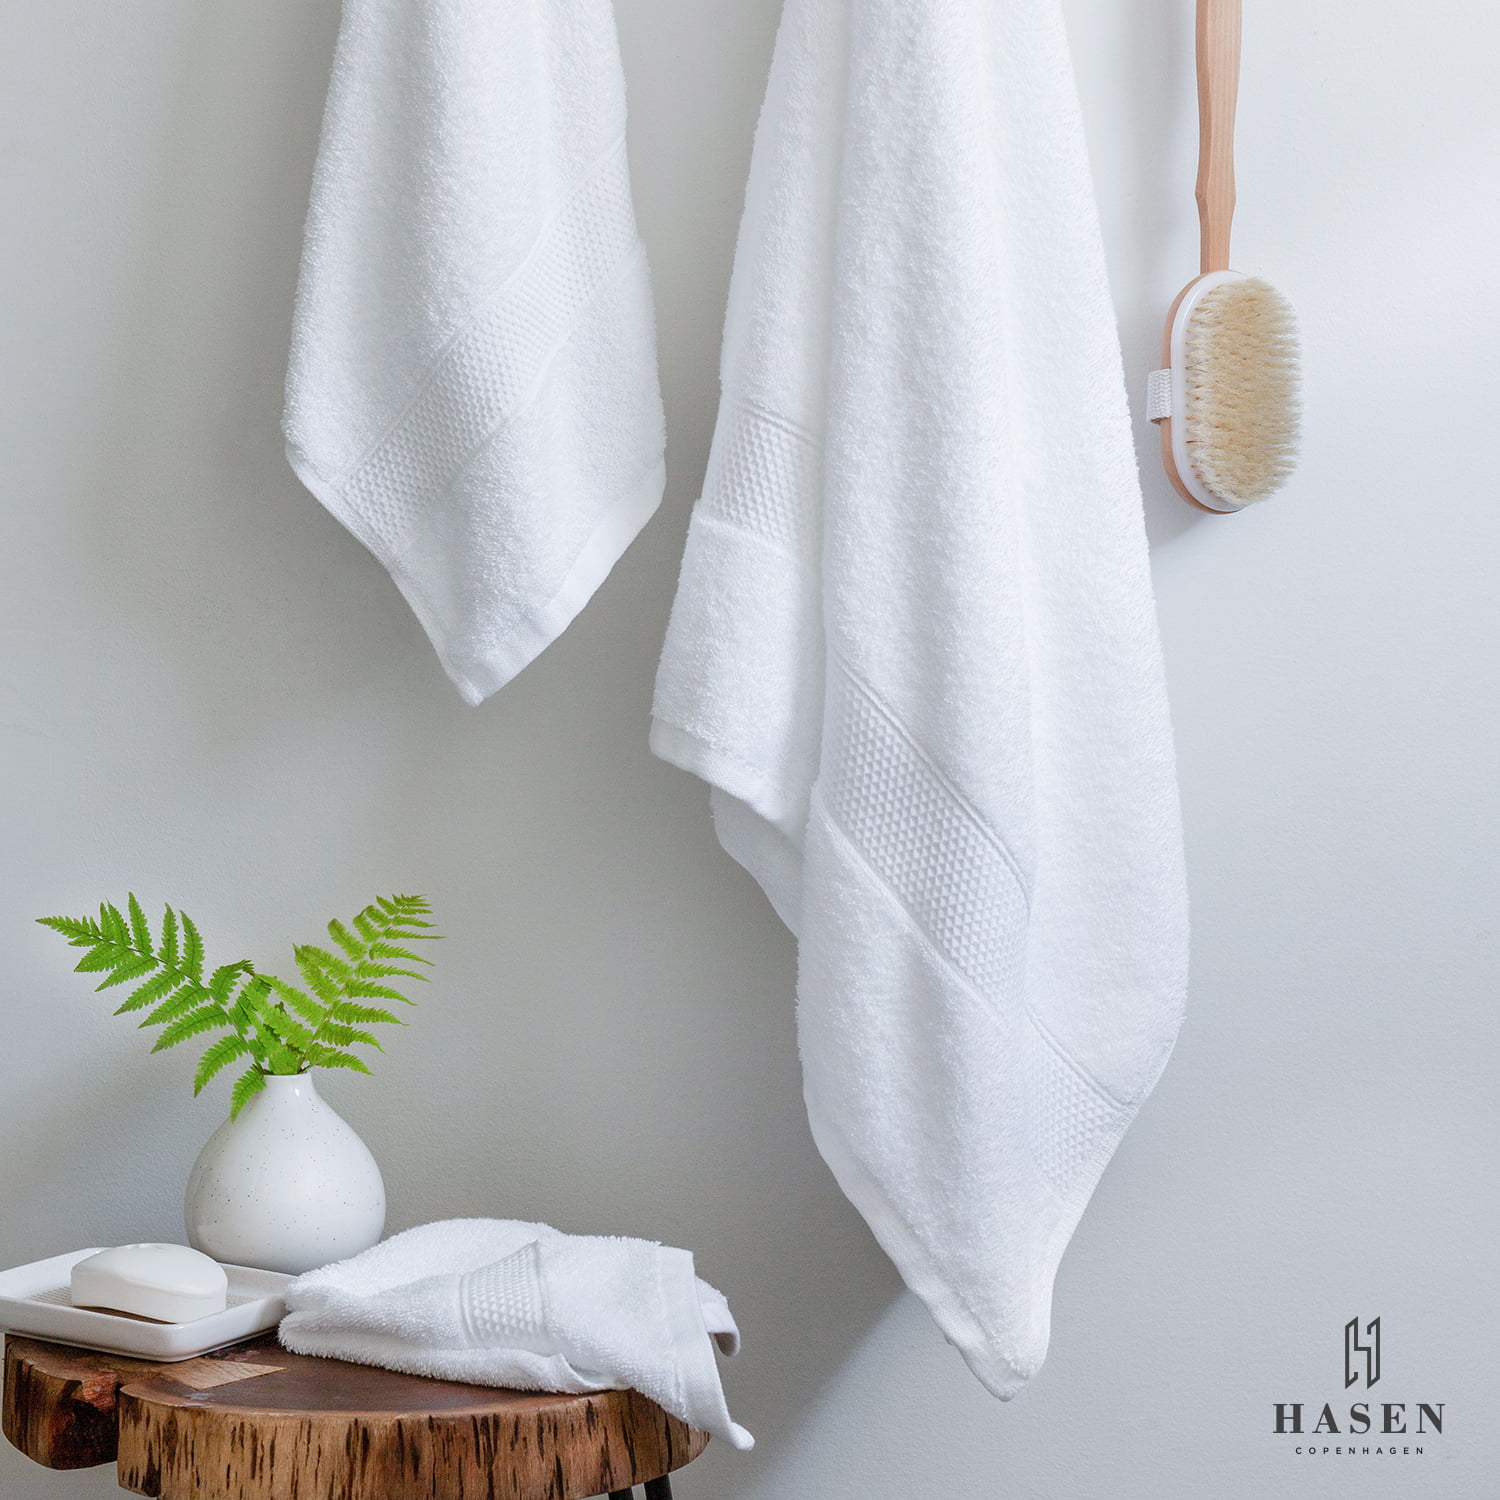 24PC Bath Towel Set (2 Sheets, 4 Bath, 6 Hand, 4 Fingertip & 8 Wash) -  White, Addy Home Best Value 